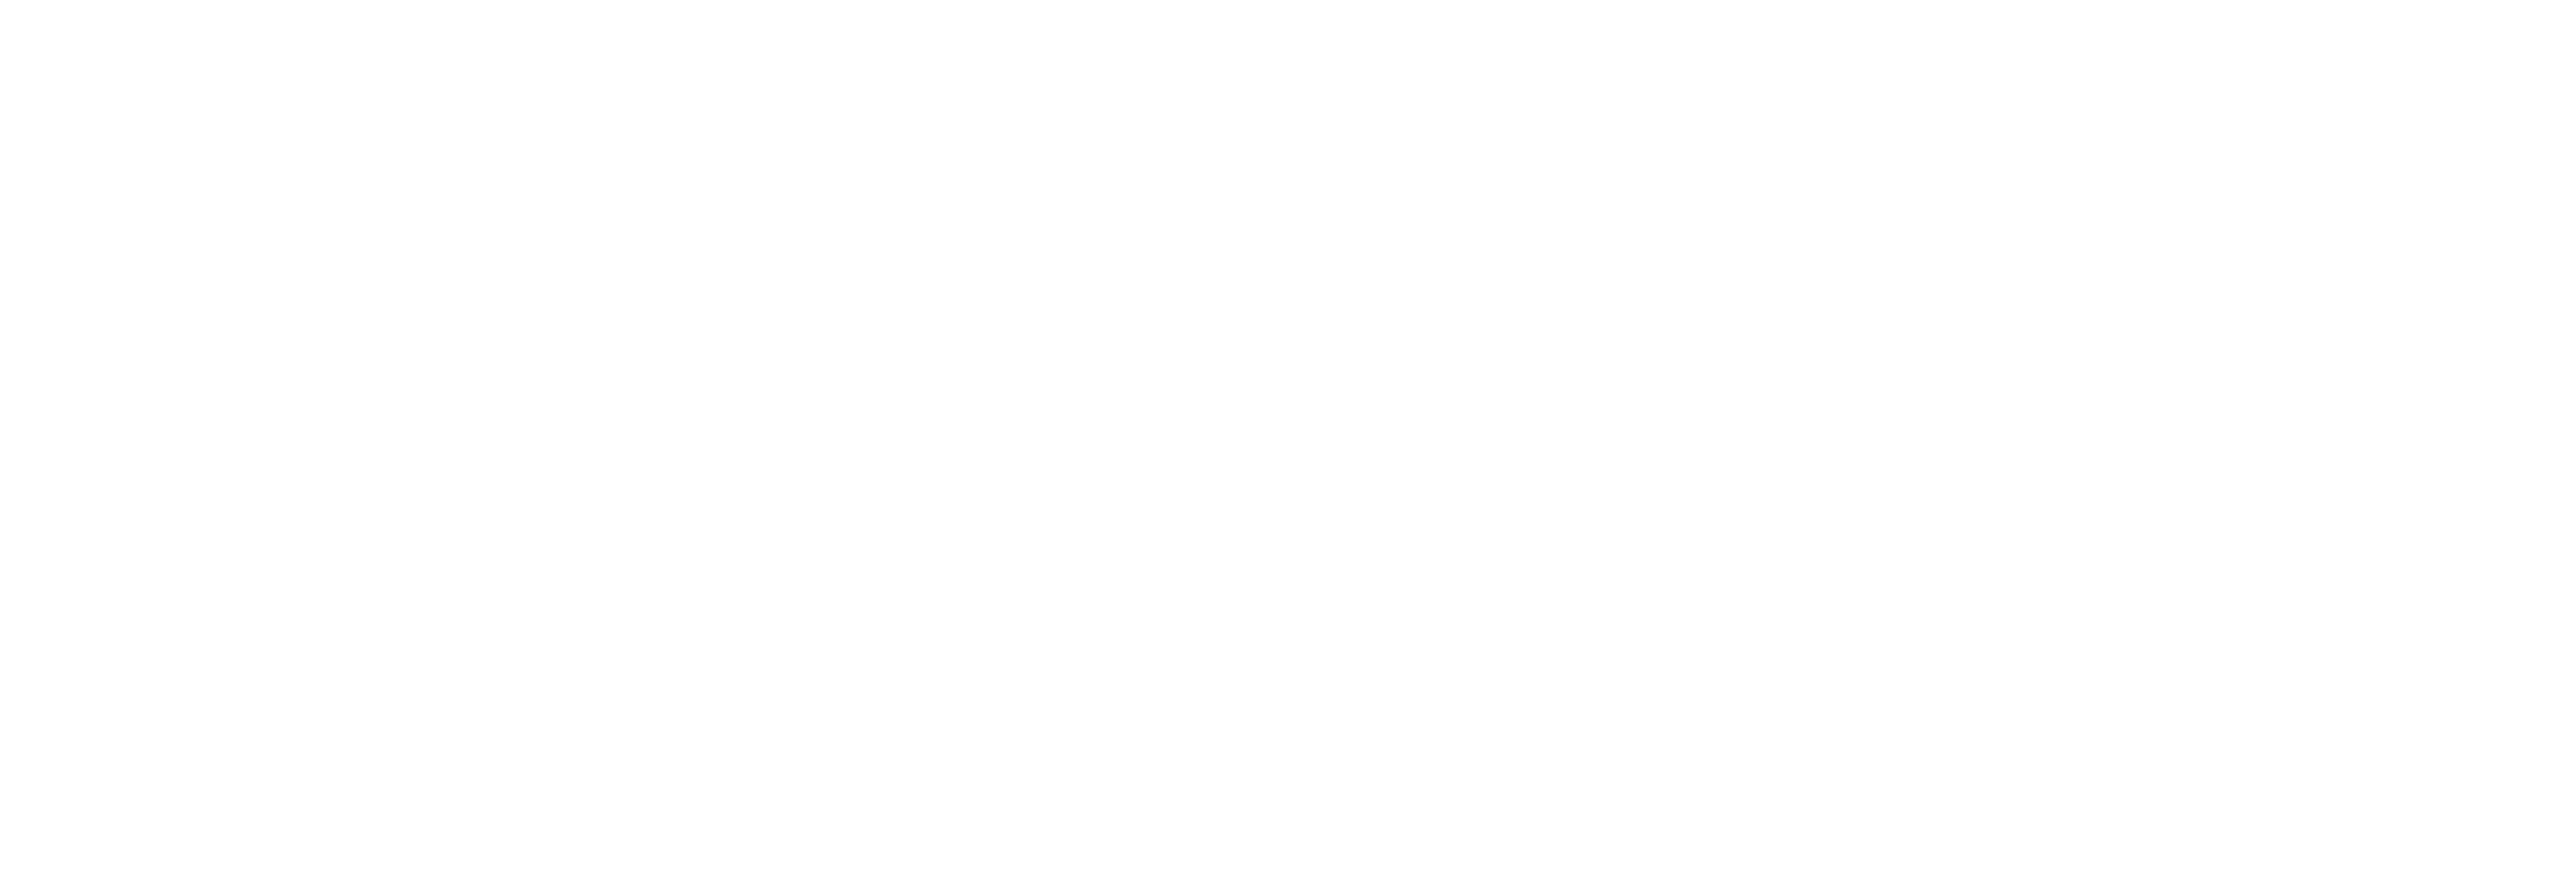 VISIT FLORIDA Logo2019_Primary_White